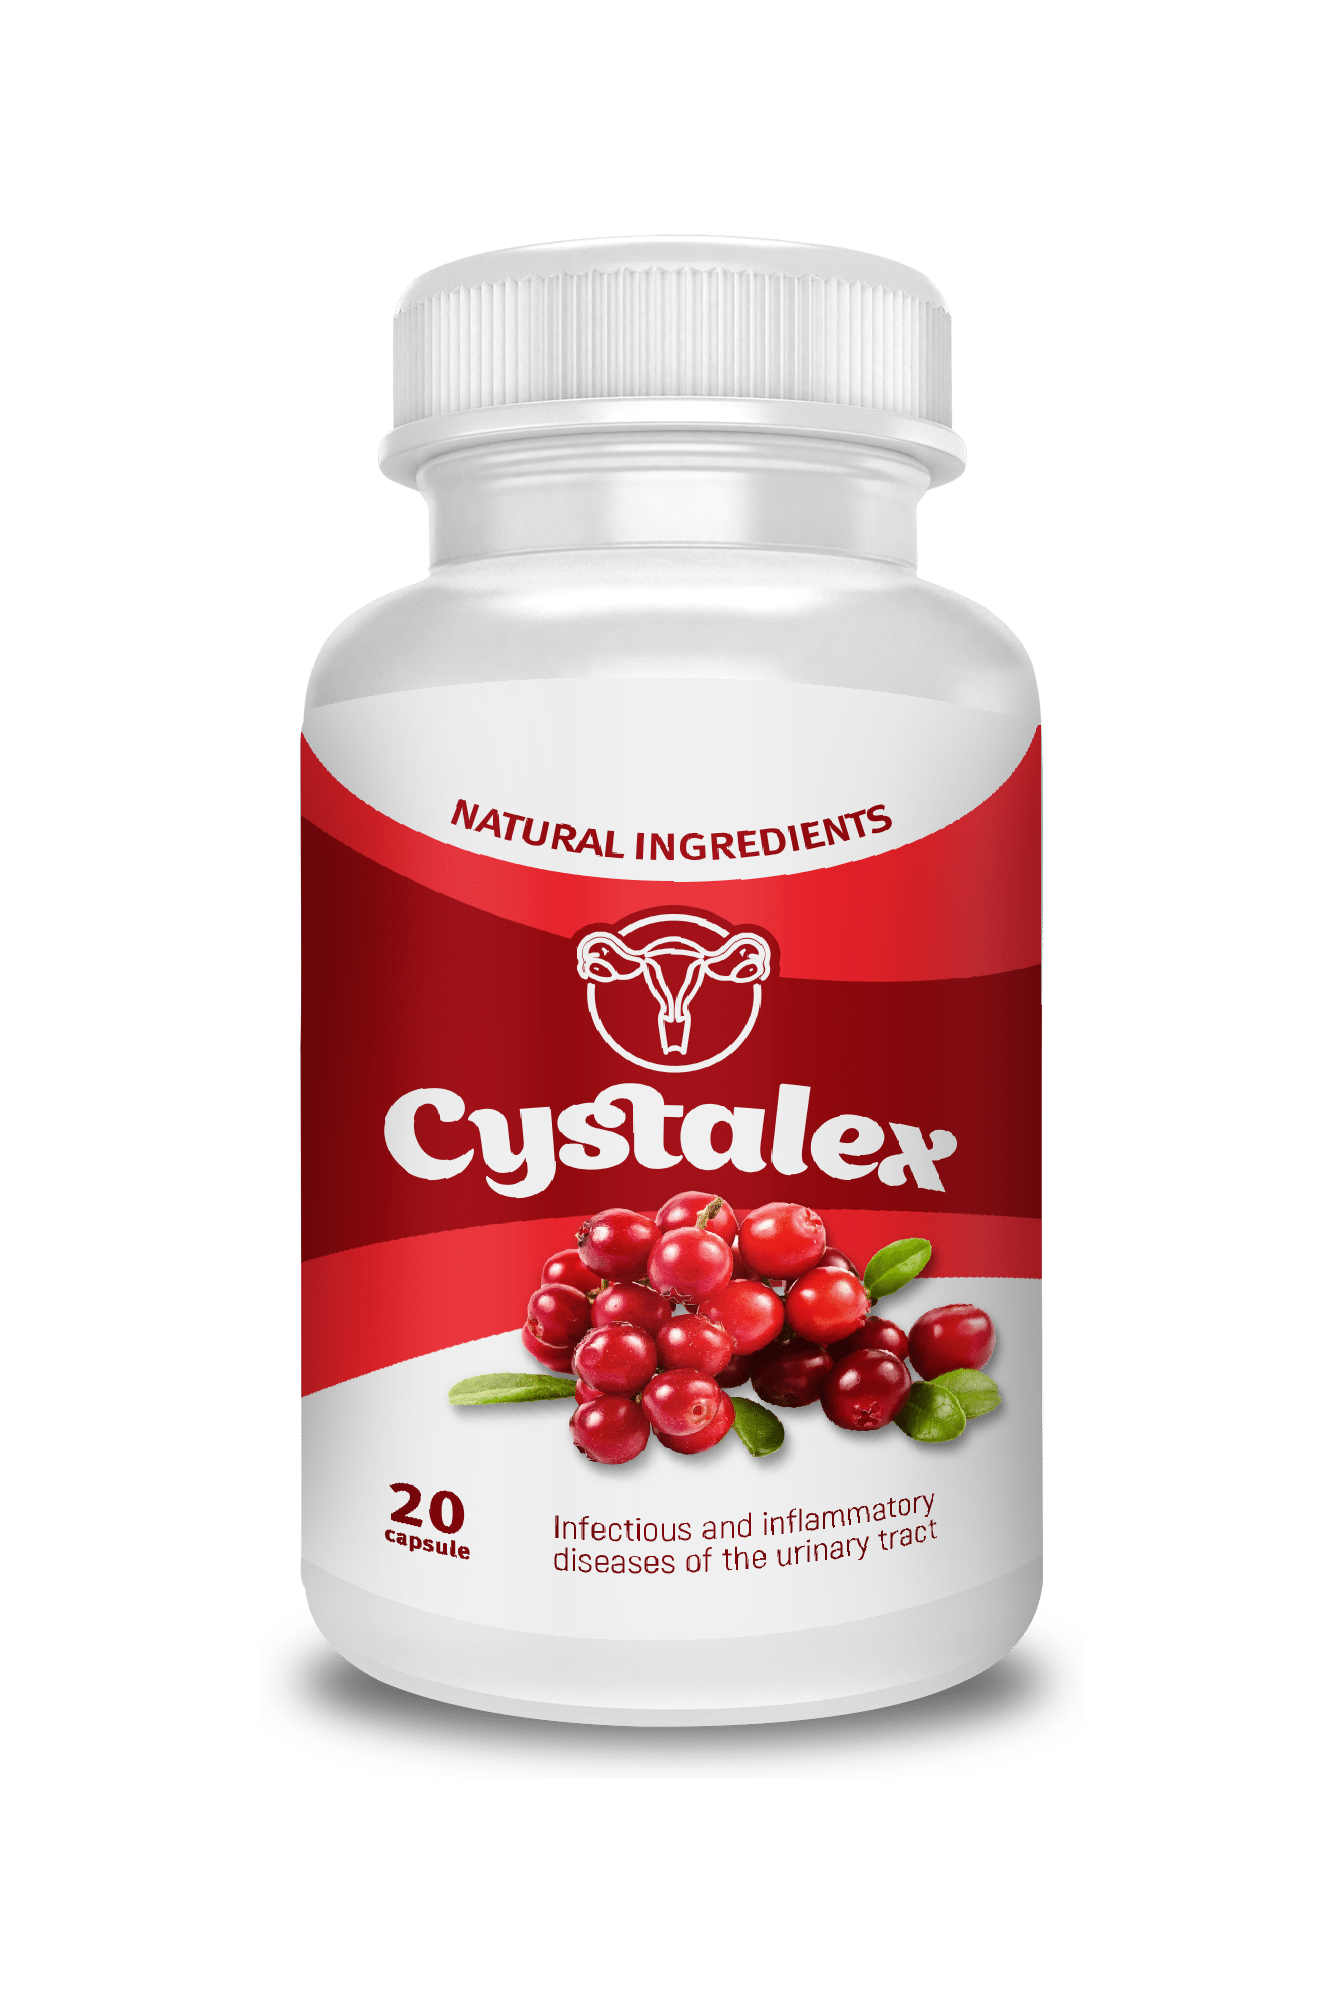 Cystalex Customer Reviews